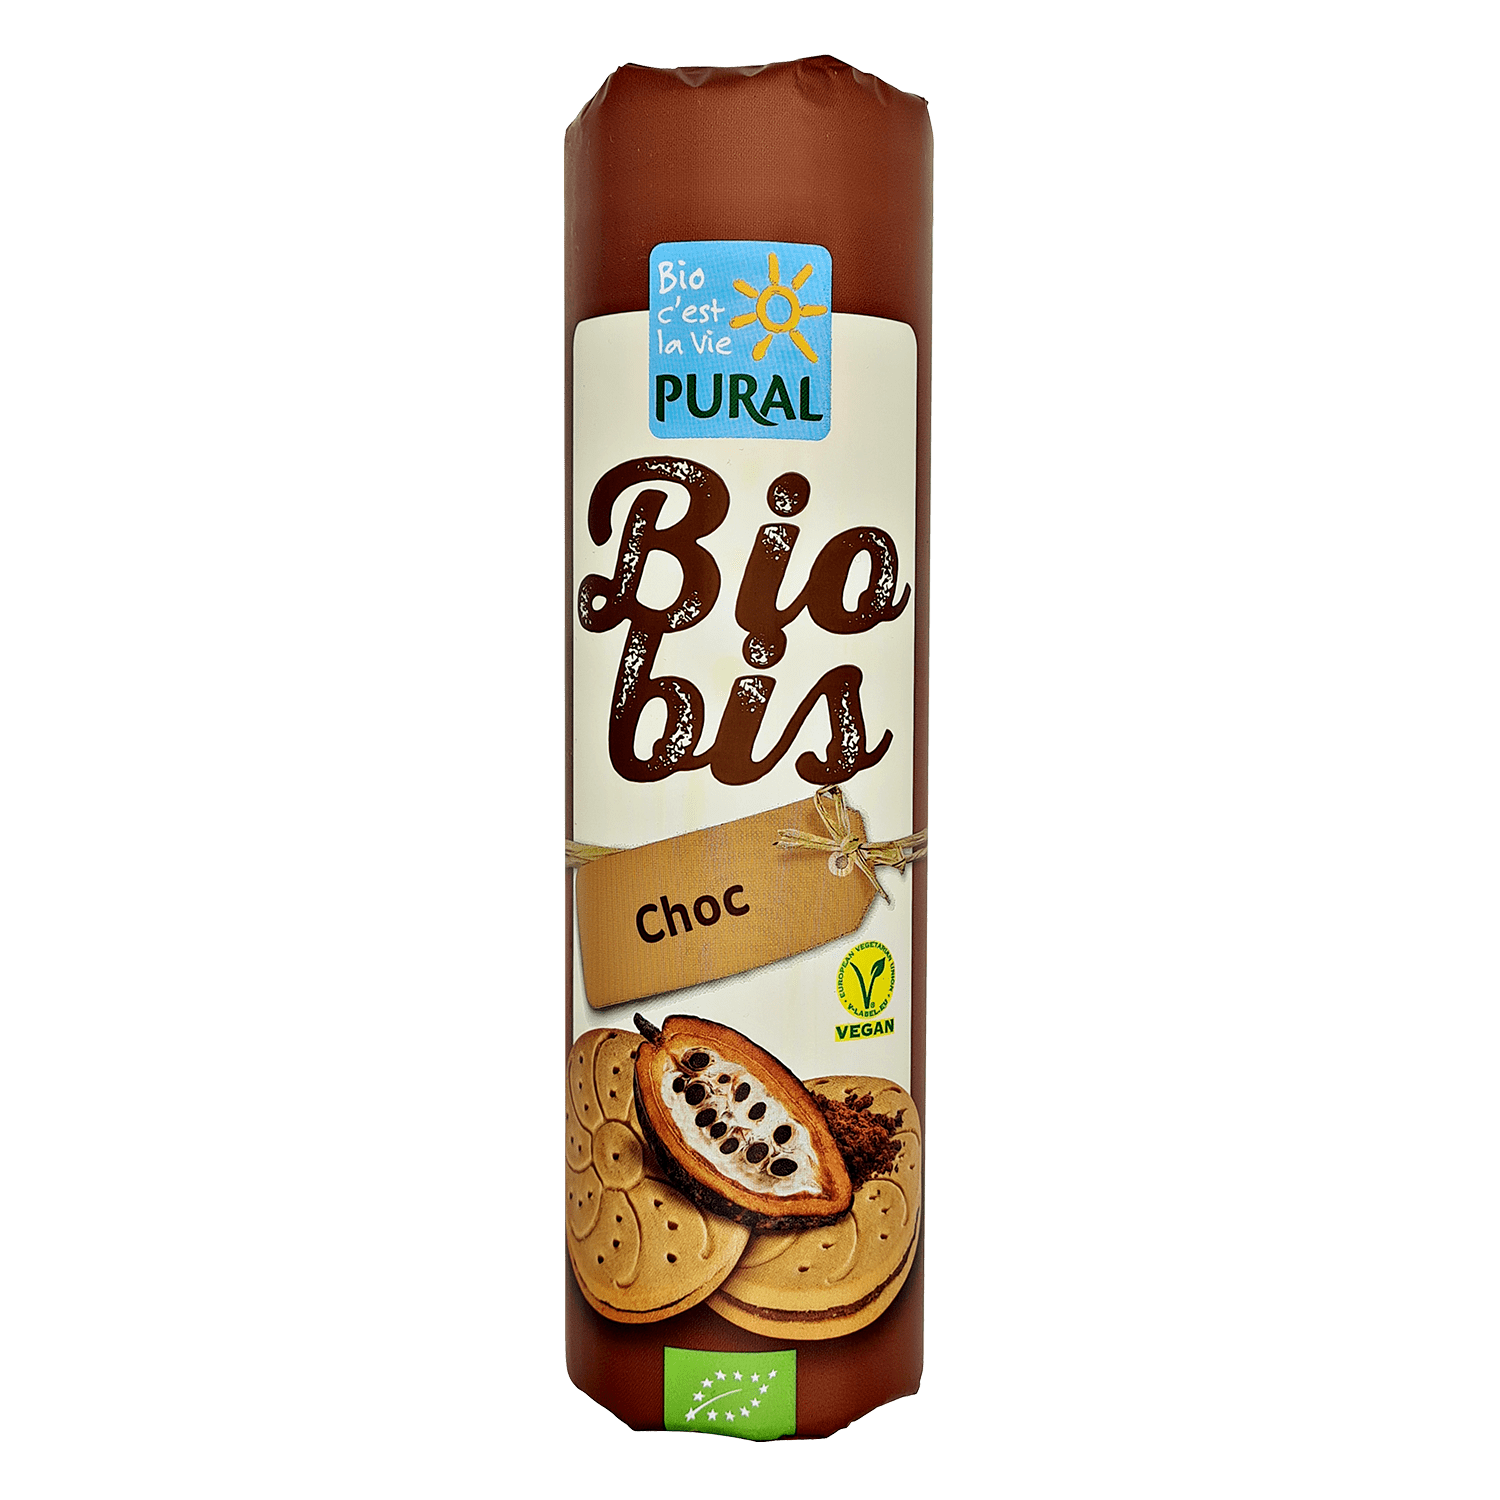 Biobis Sandwich Biscuit Choc, Organic, 300g